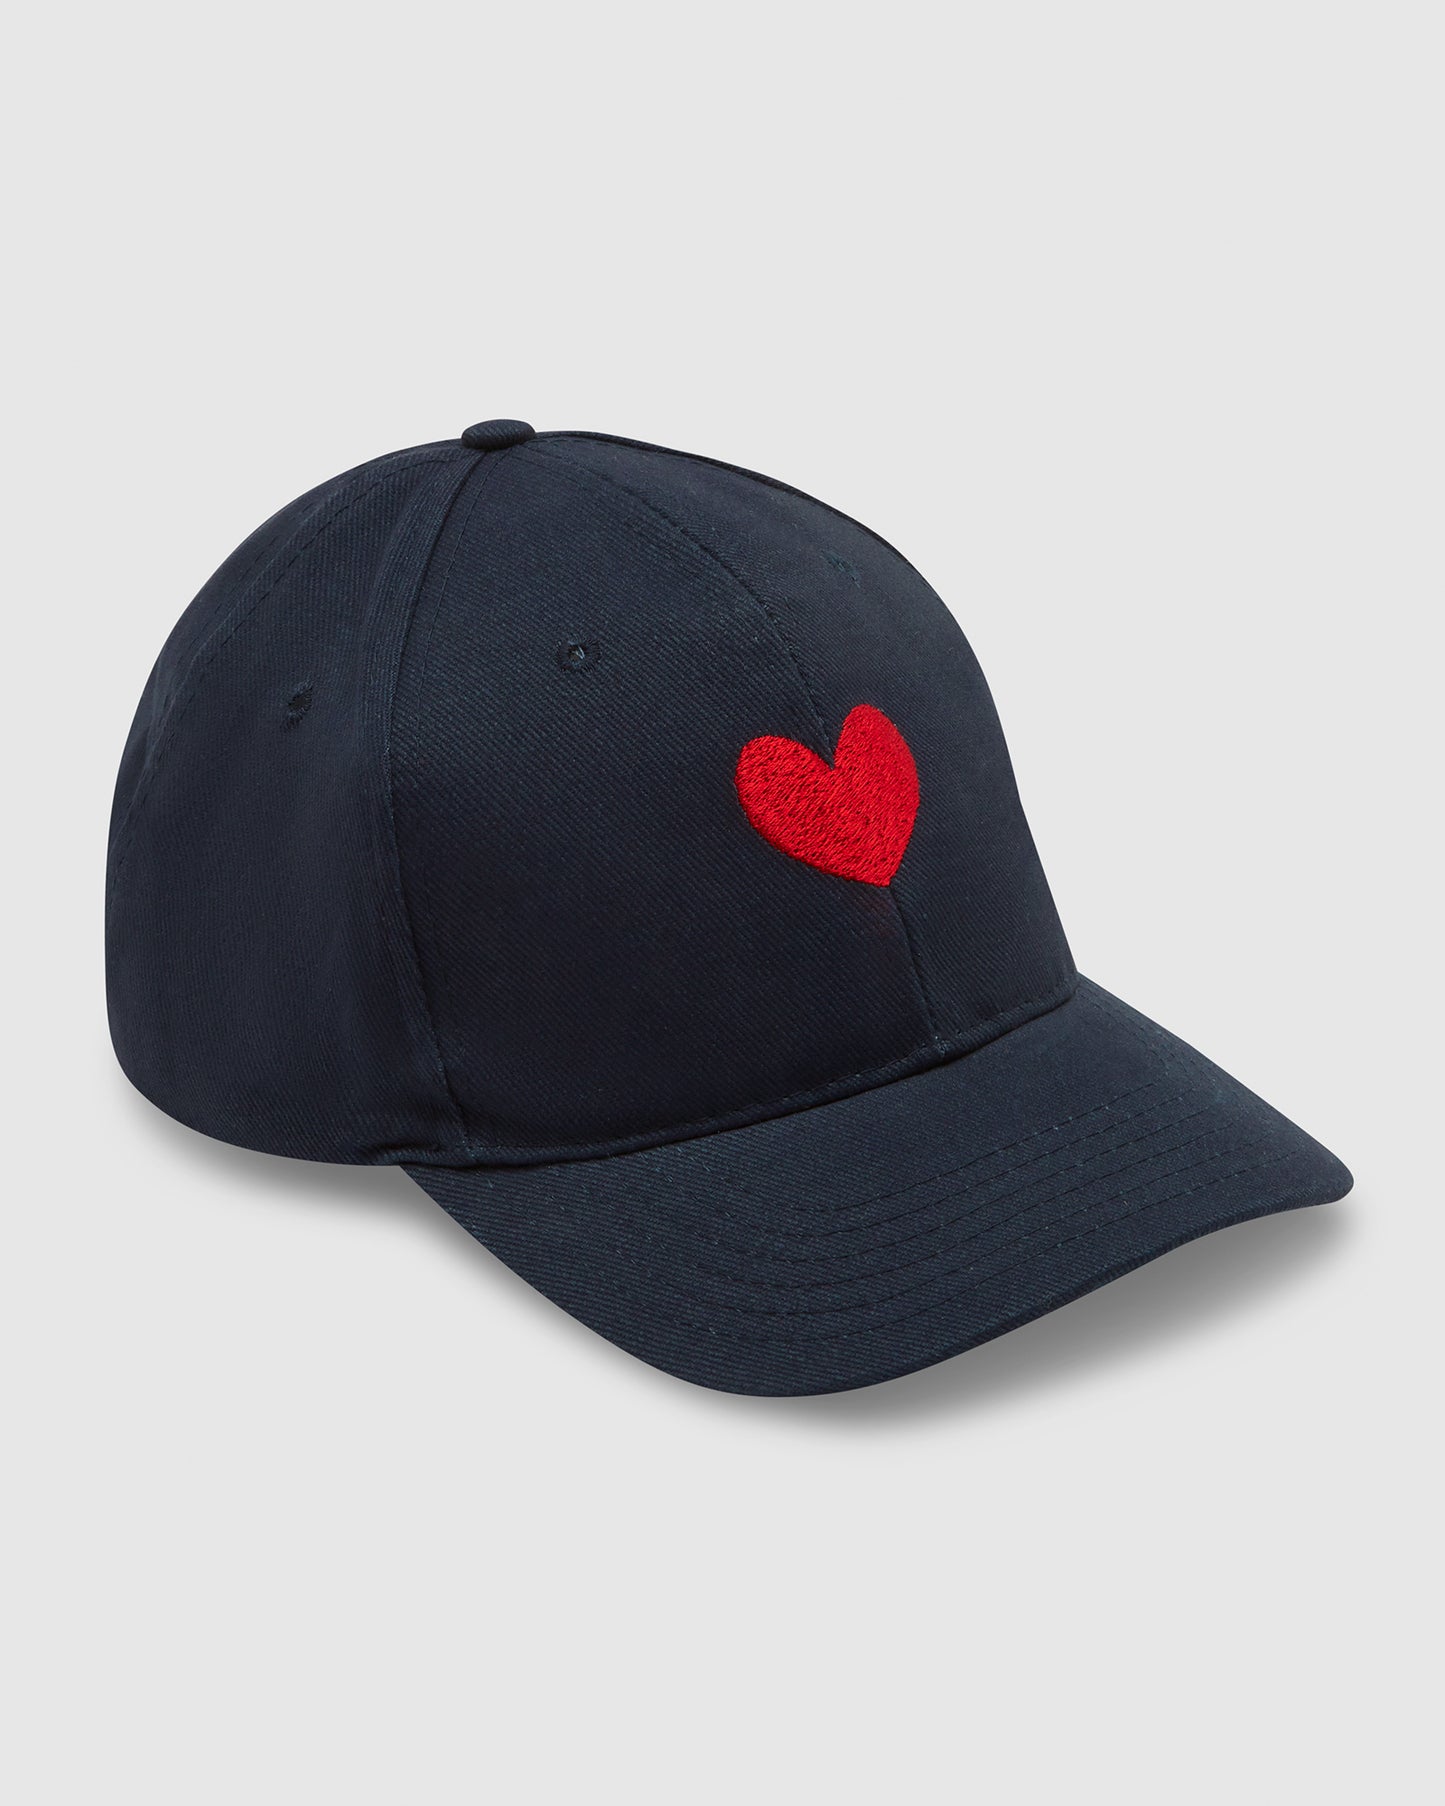 Coeur Cap - Heart Cap